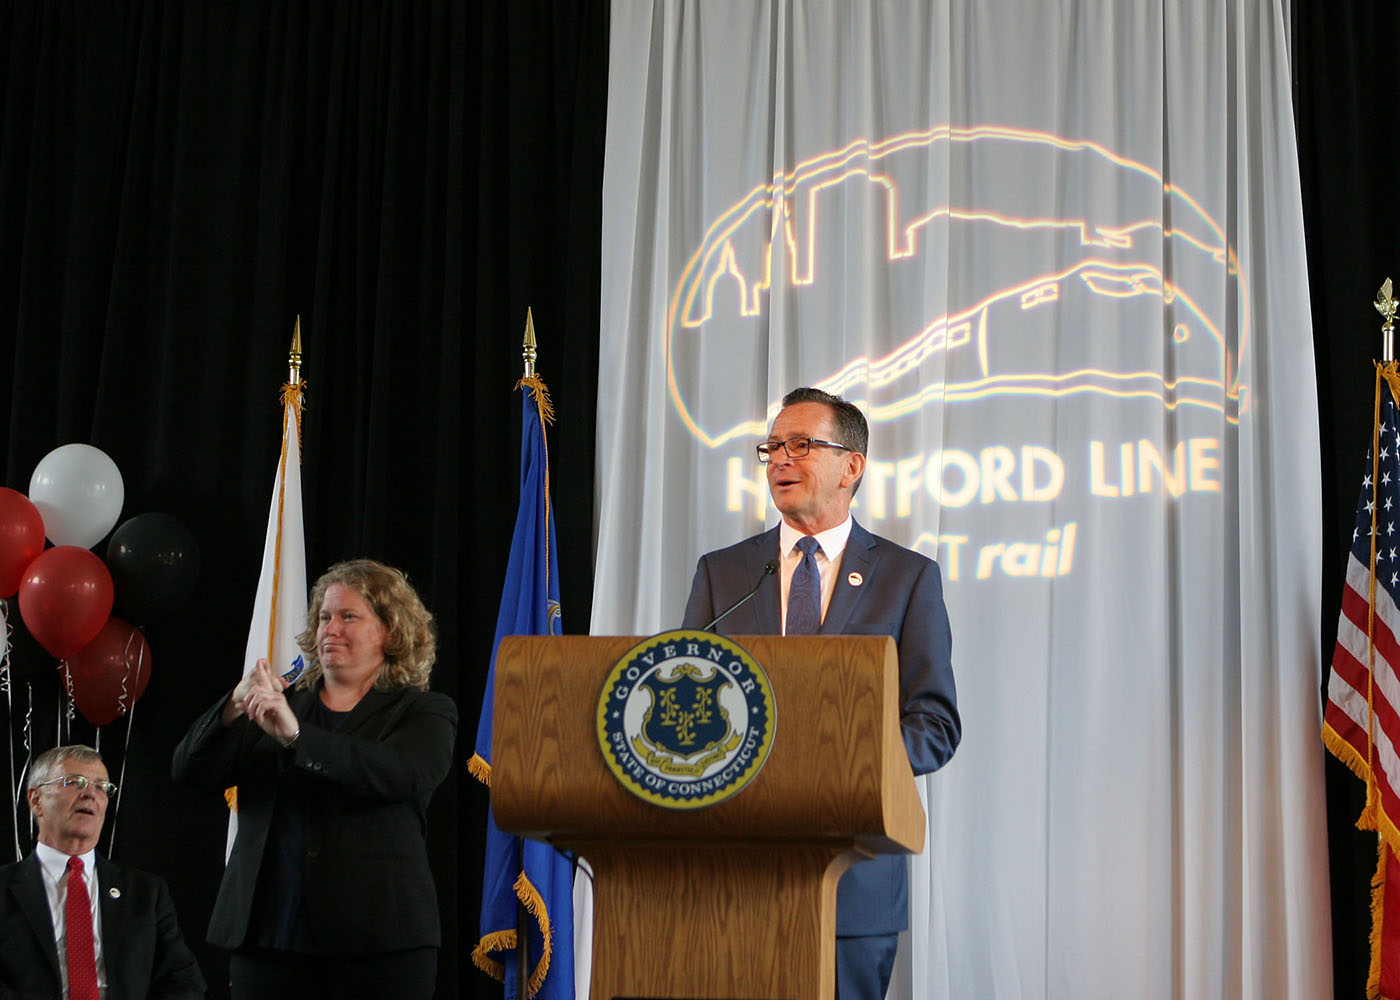 Hartford Line Opening - Governor Speech